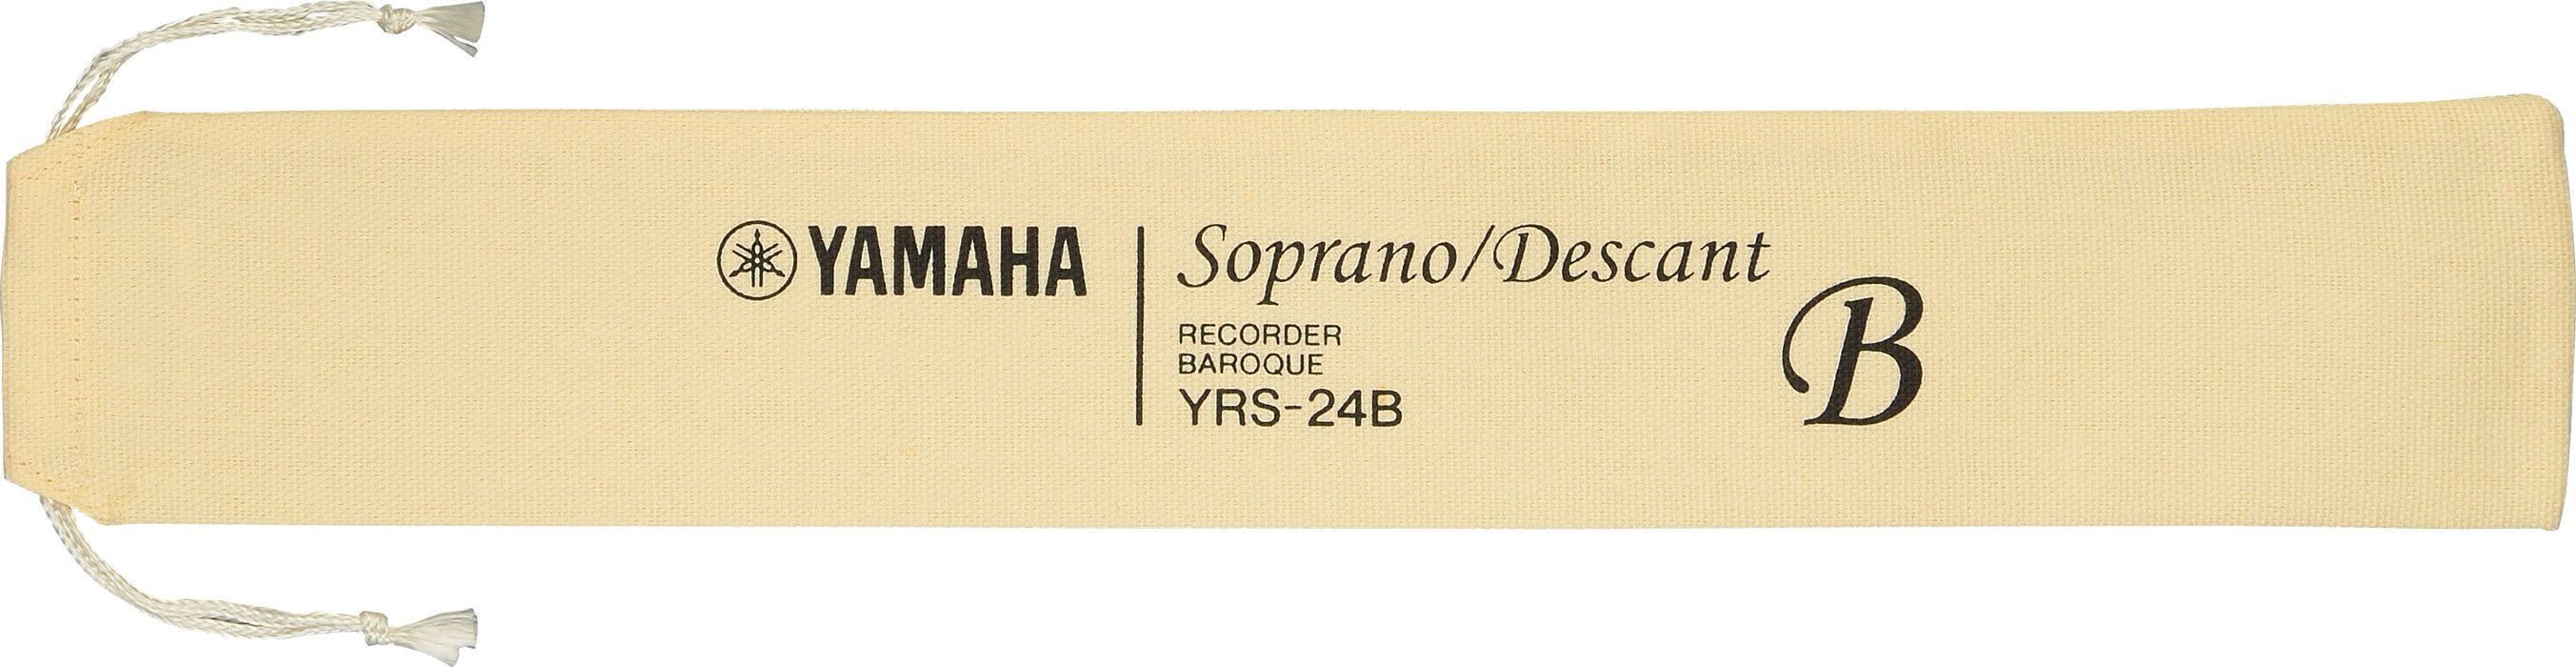 Yamaha YRS24B Descant (Soprano) Recorder